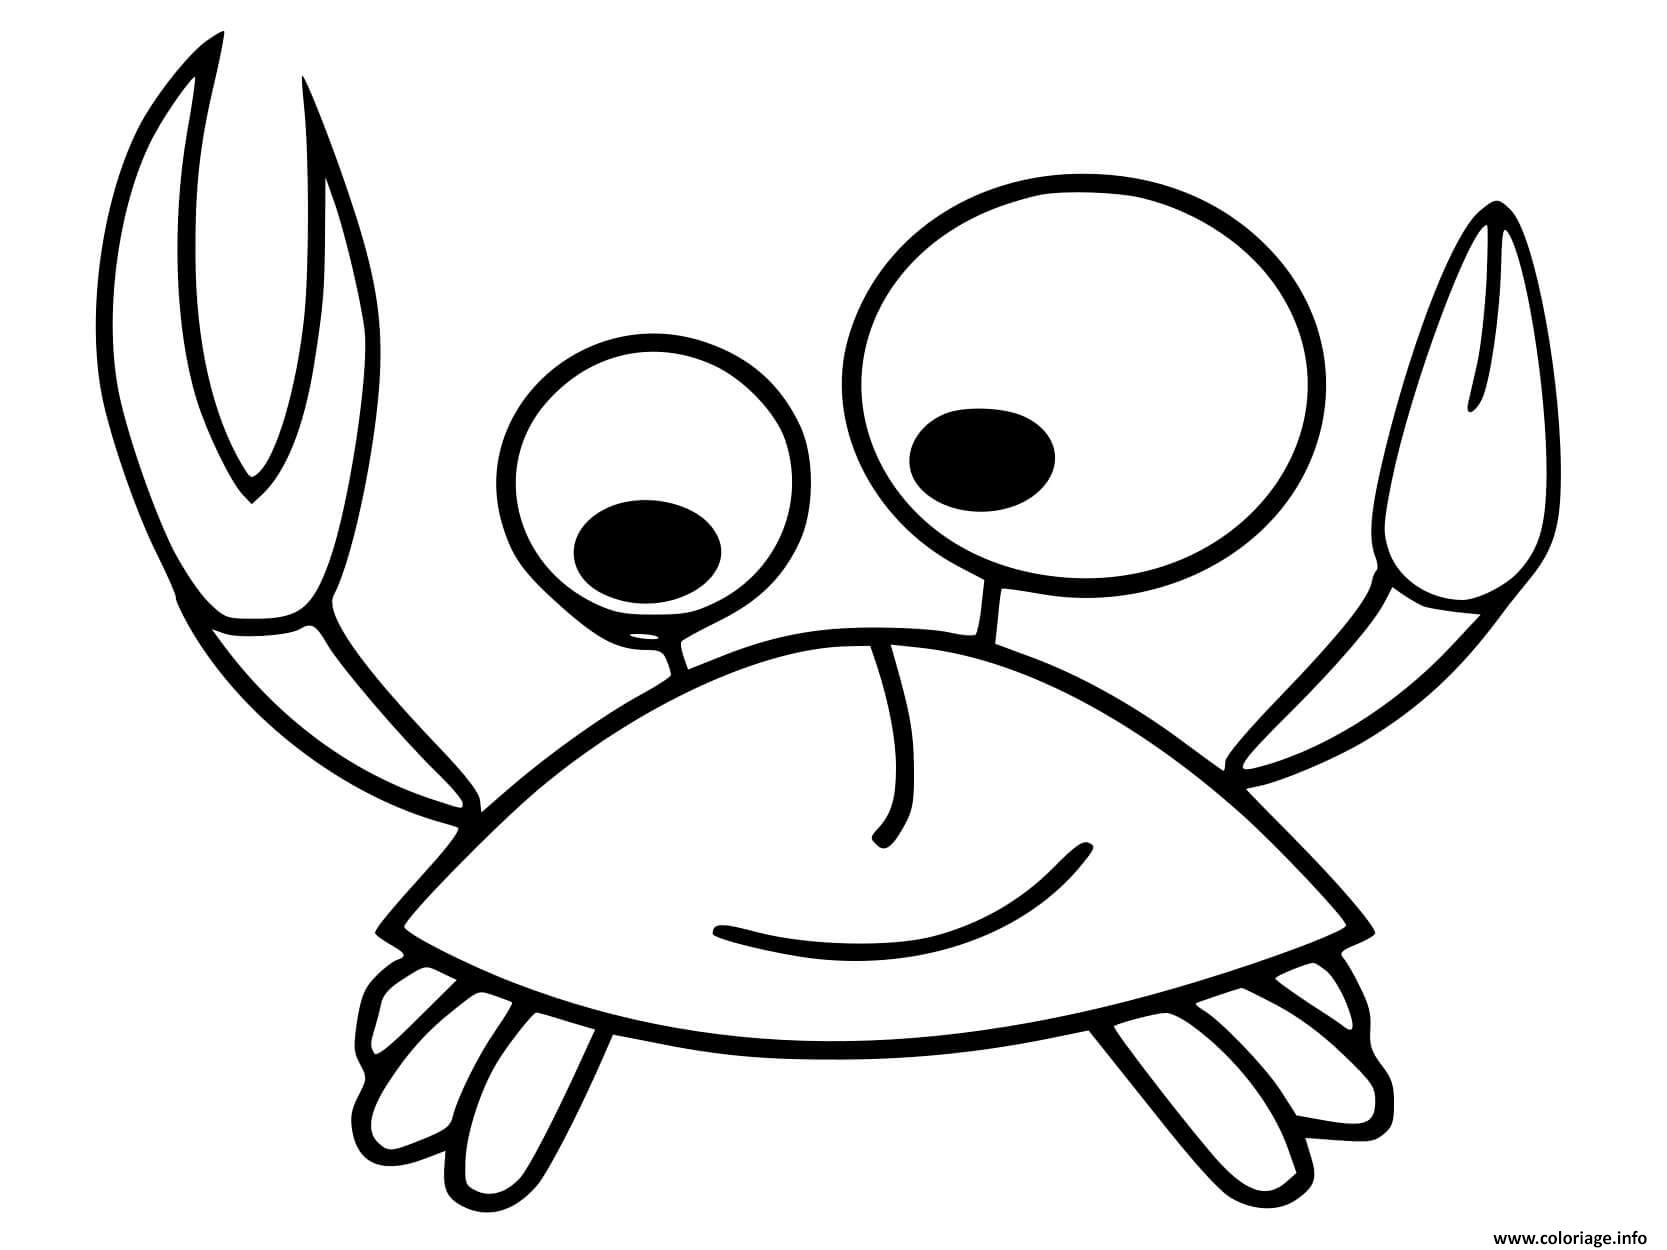 coloriage crabe facile simple dessin a imprimer league of legends vi